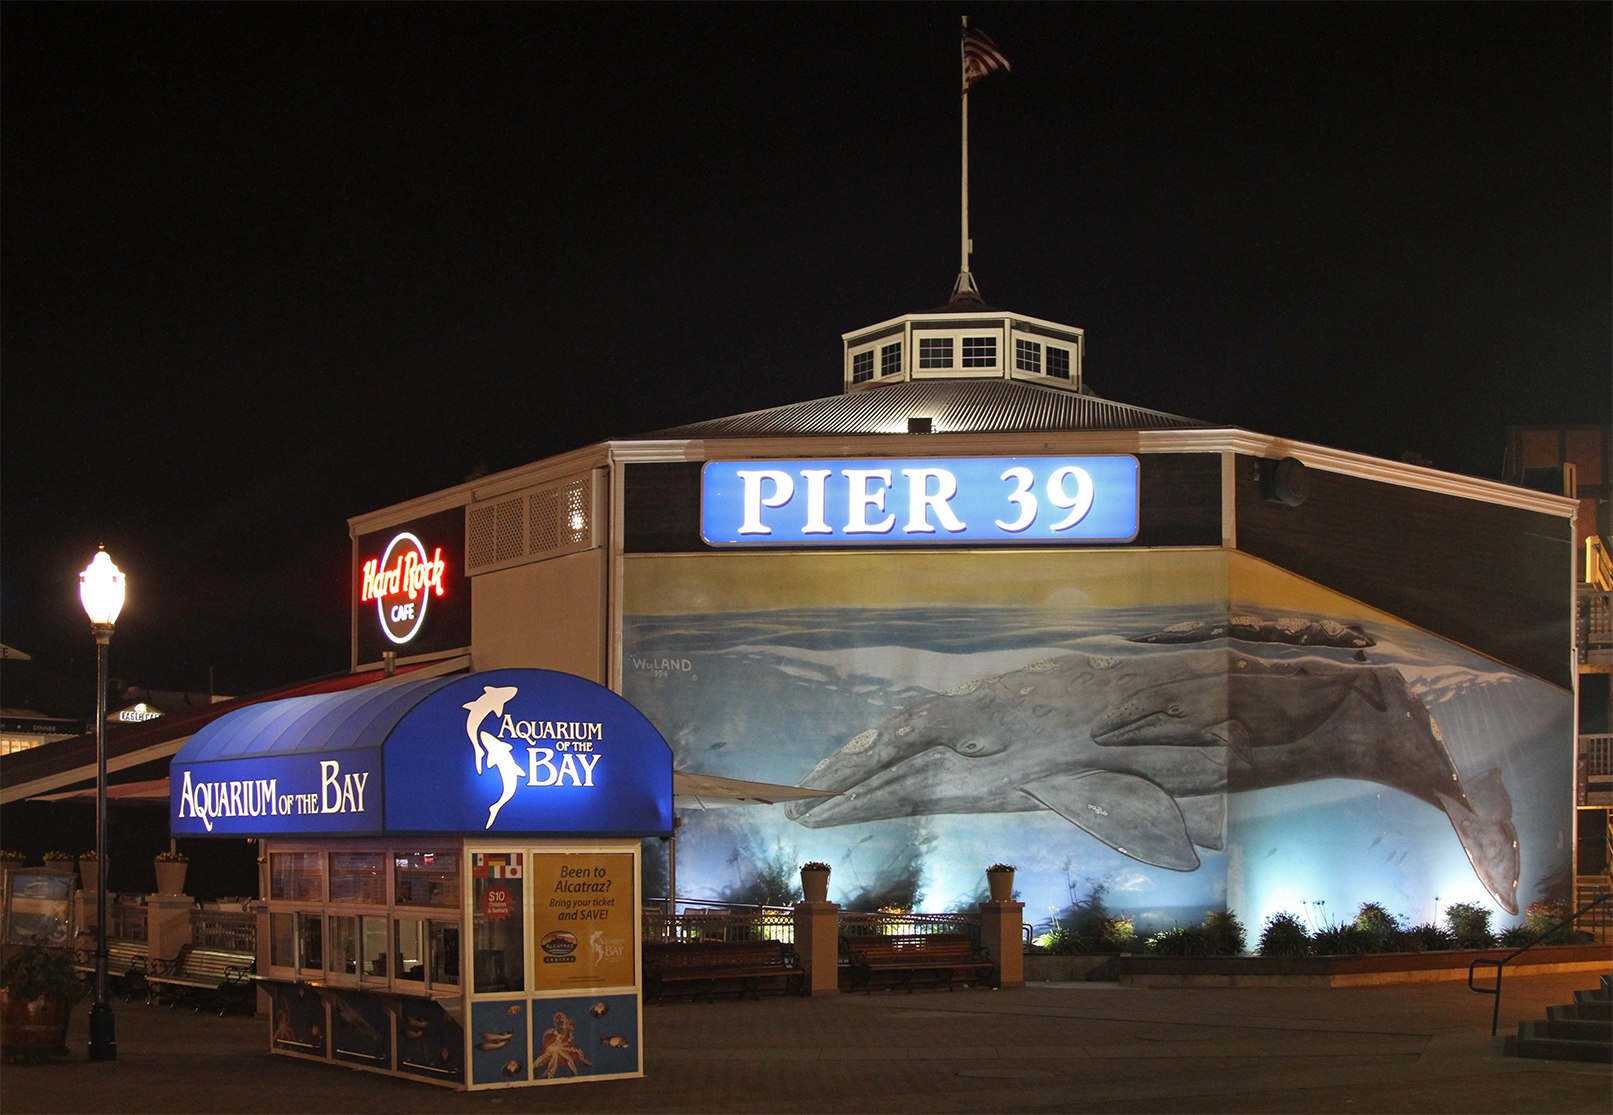 Pier 39 - Wikipedia